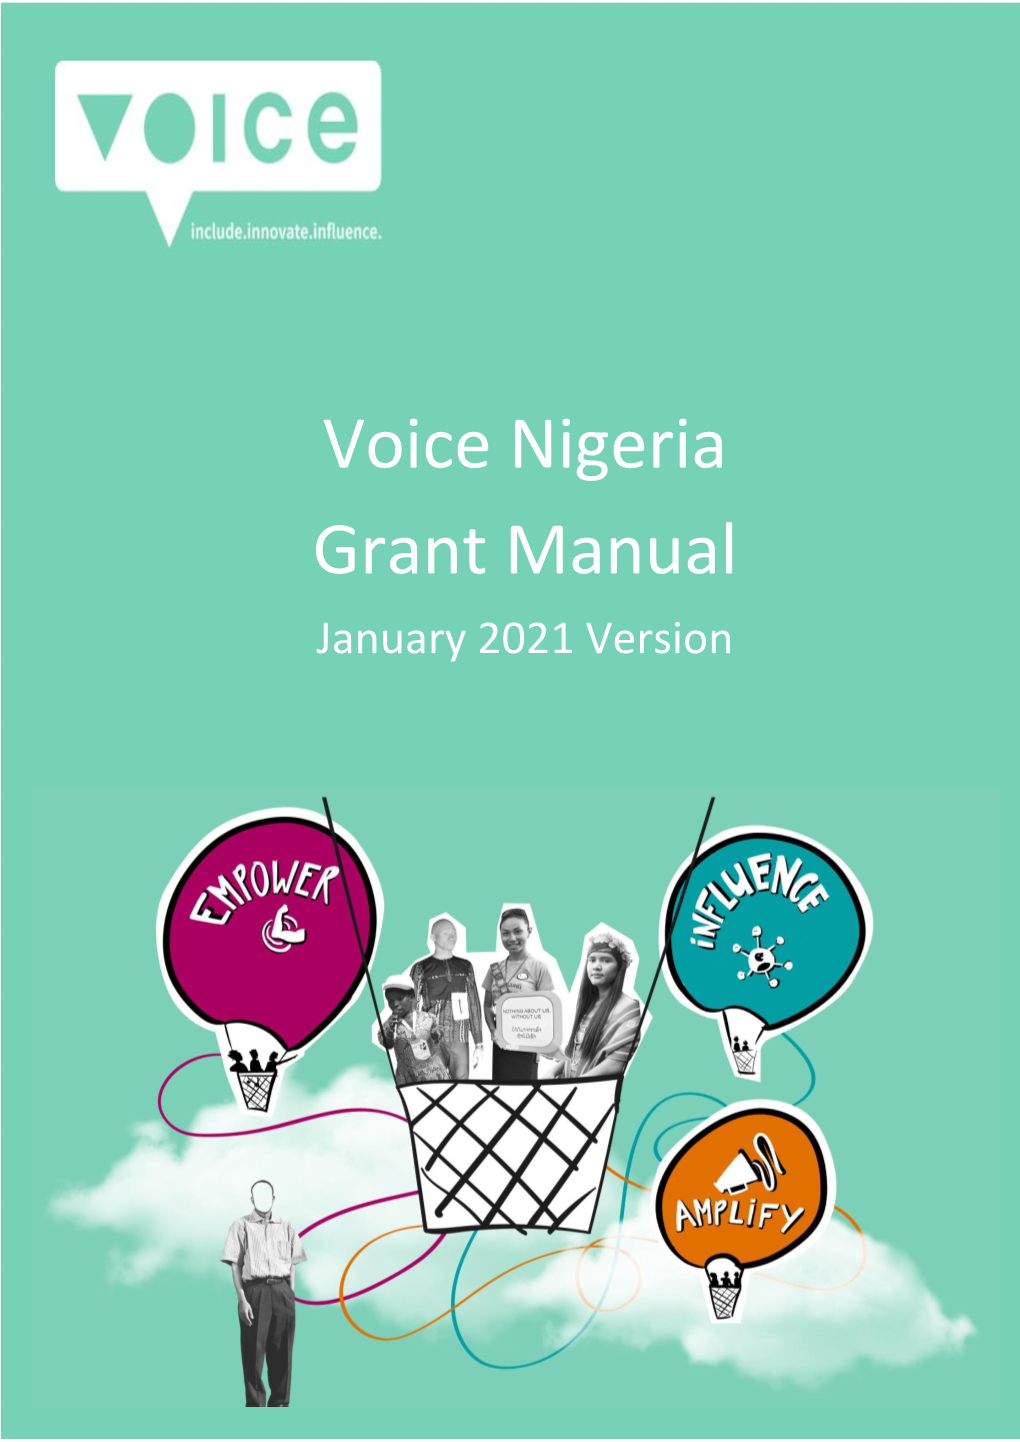 Voice Nigeria Grant Manual January 2021 Version